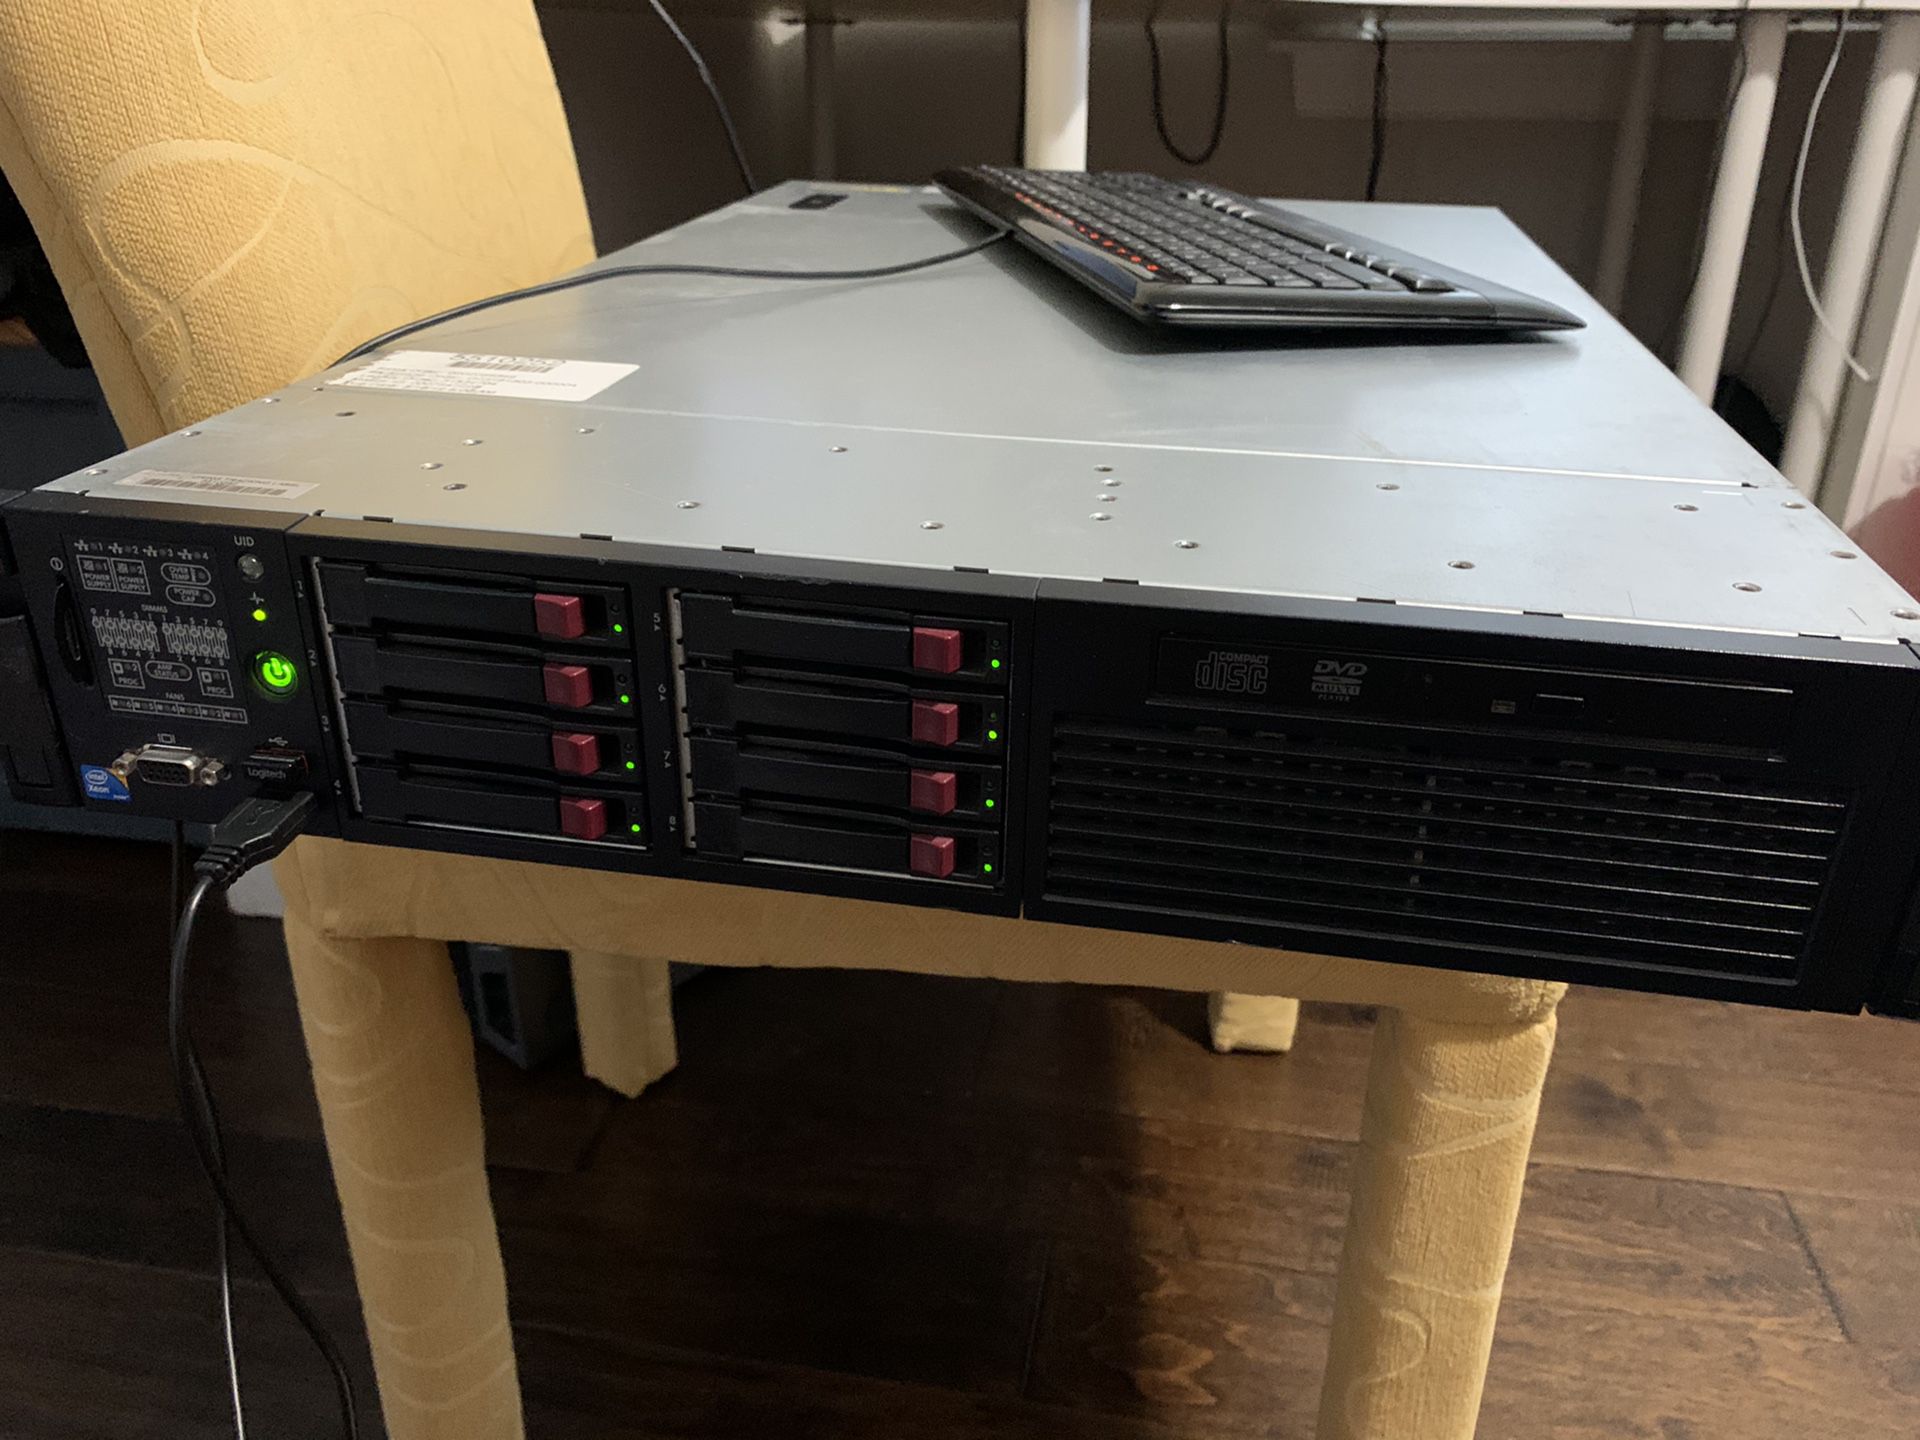 HP ProLiant DL380 G7 server